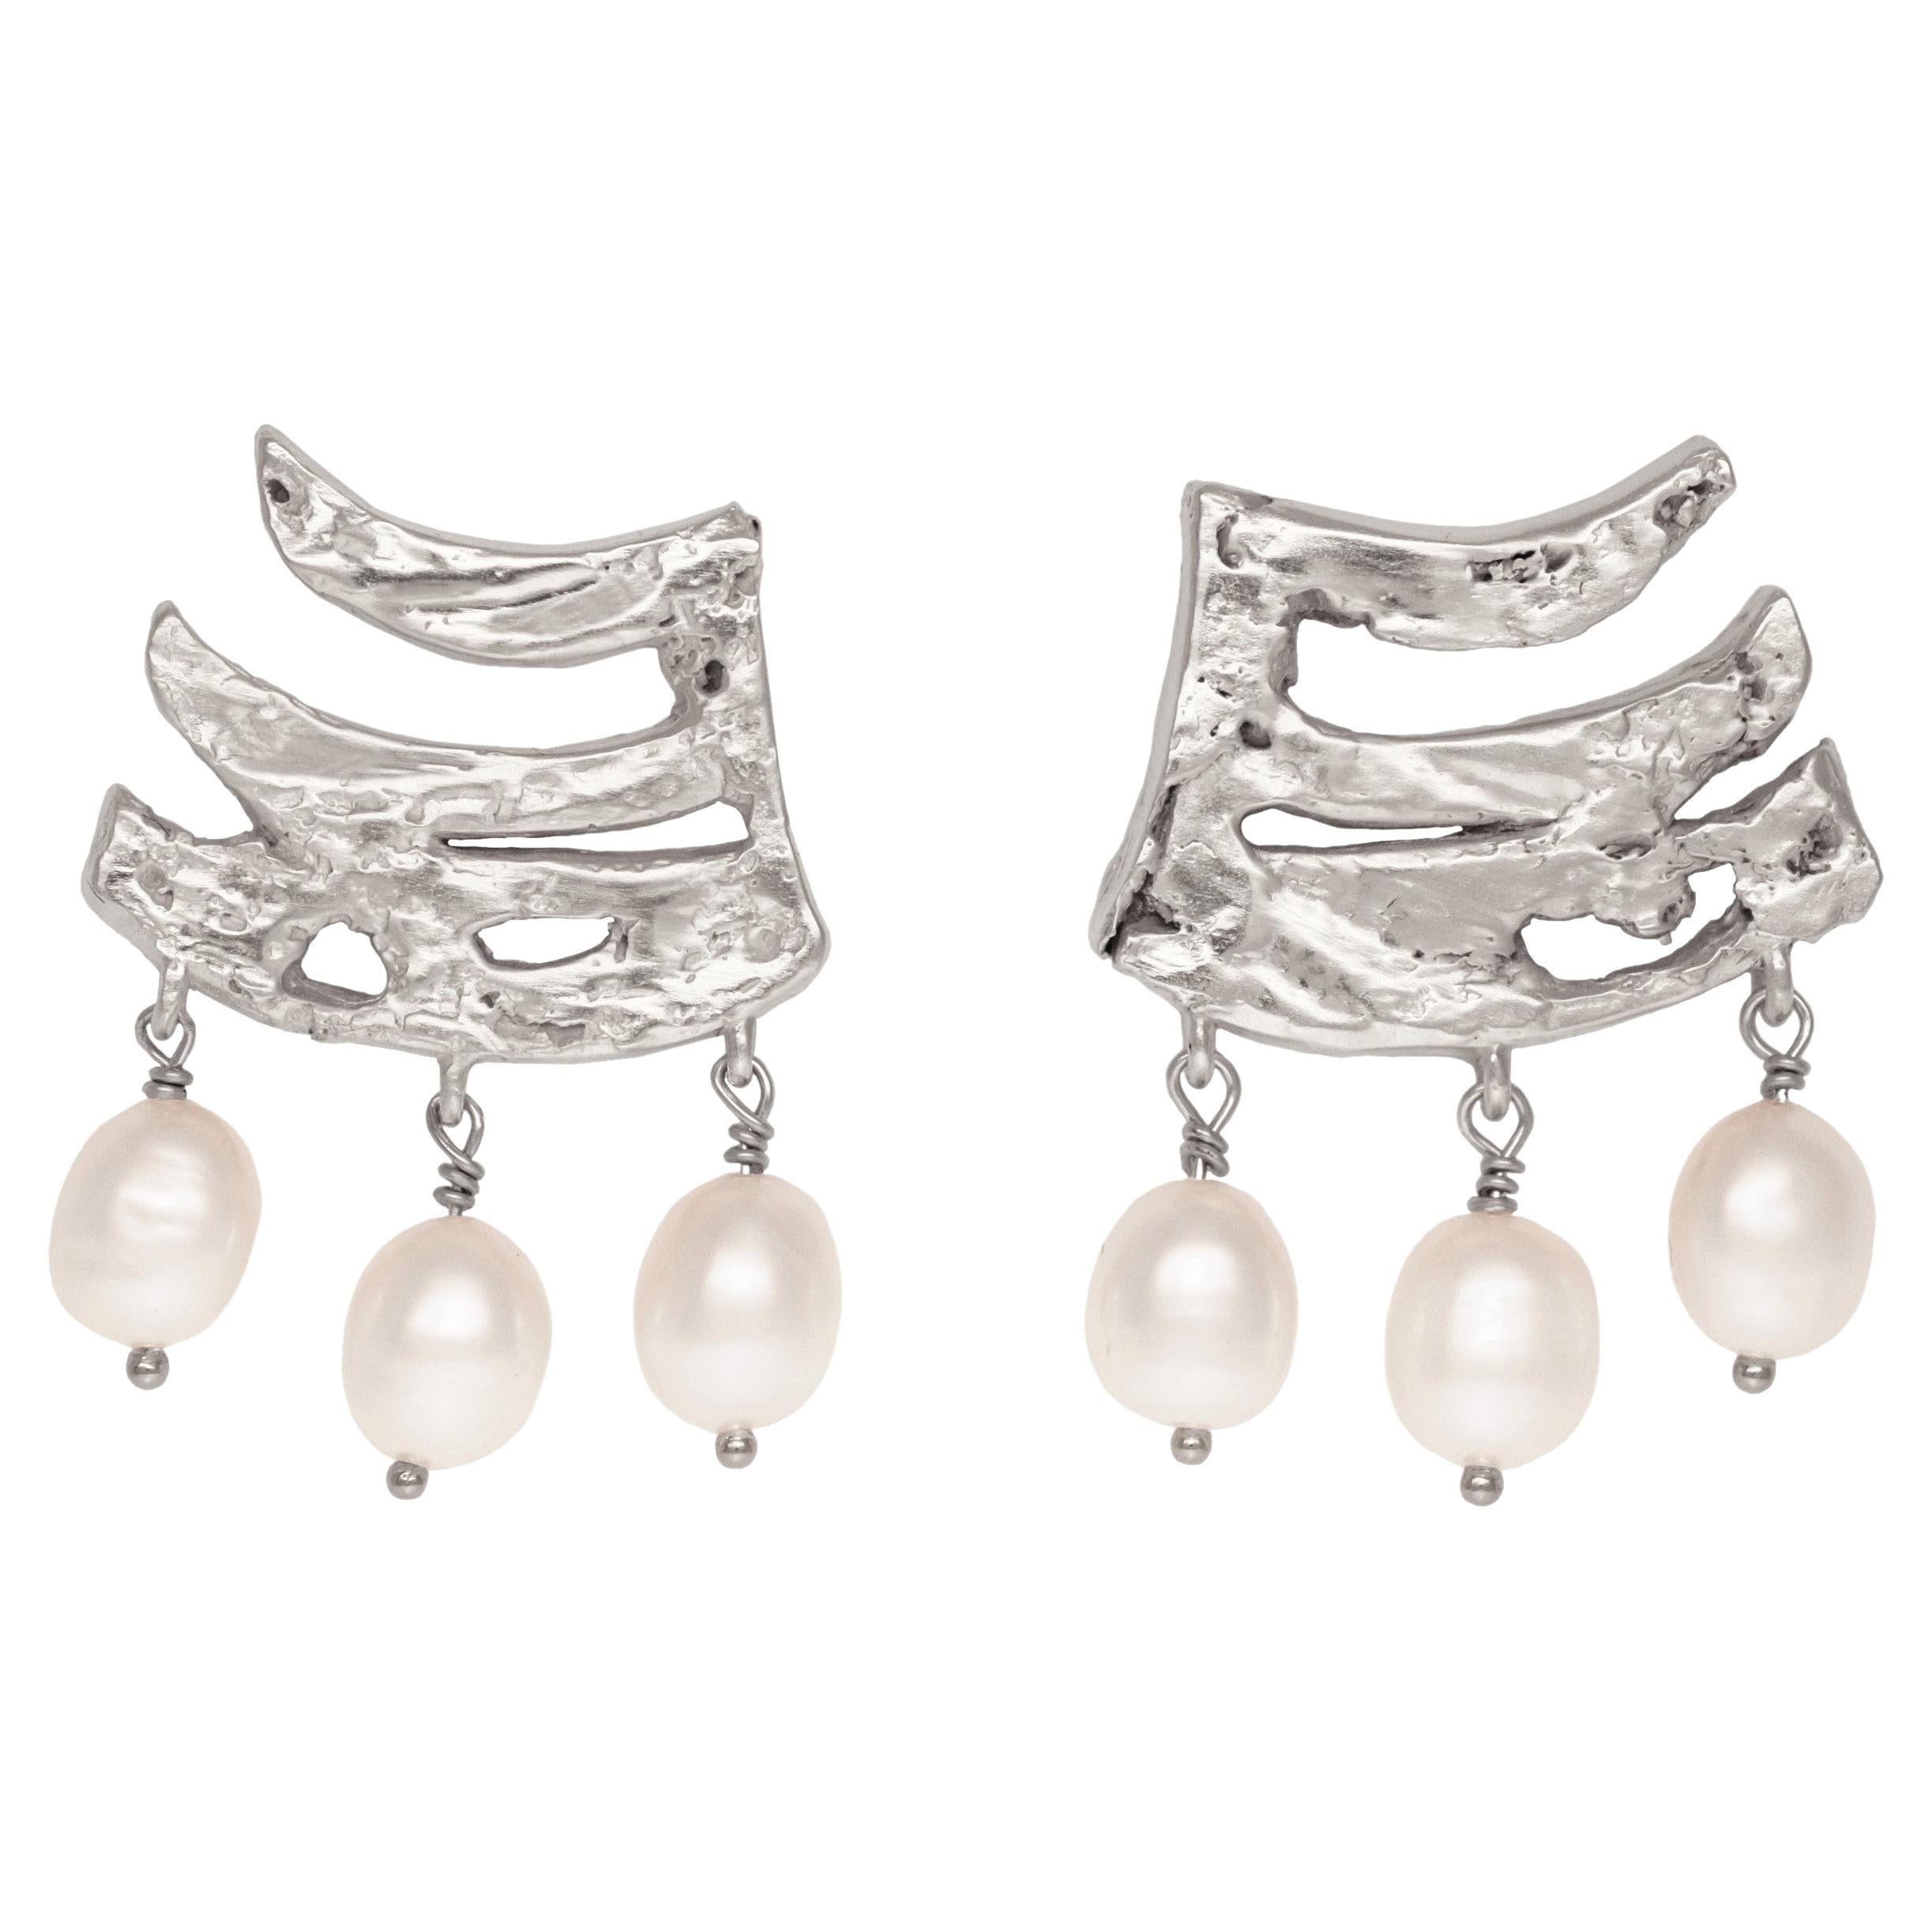 Eternal Luck Earrings with Freshwater Pearls